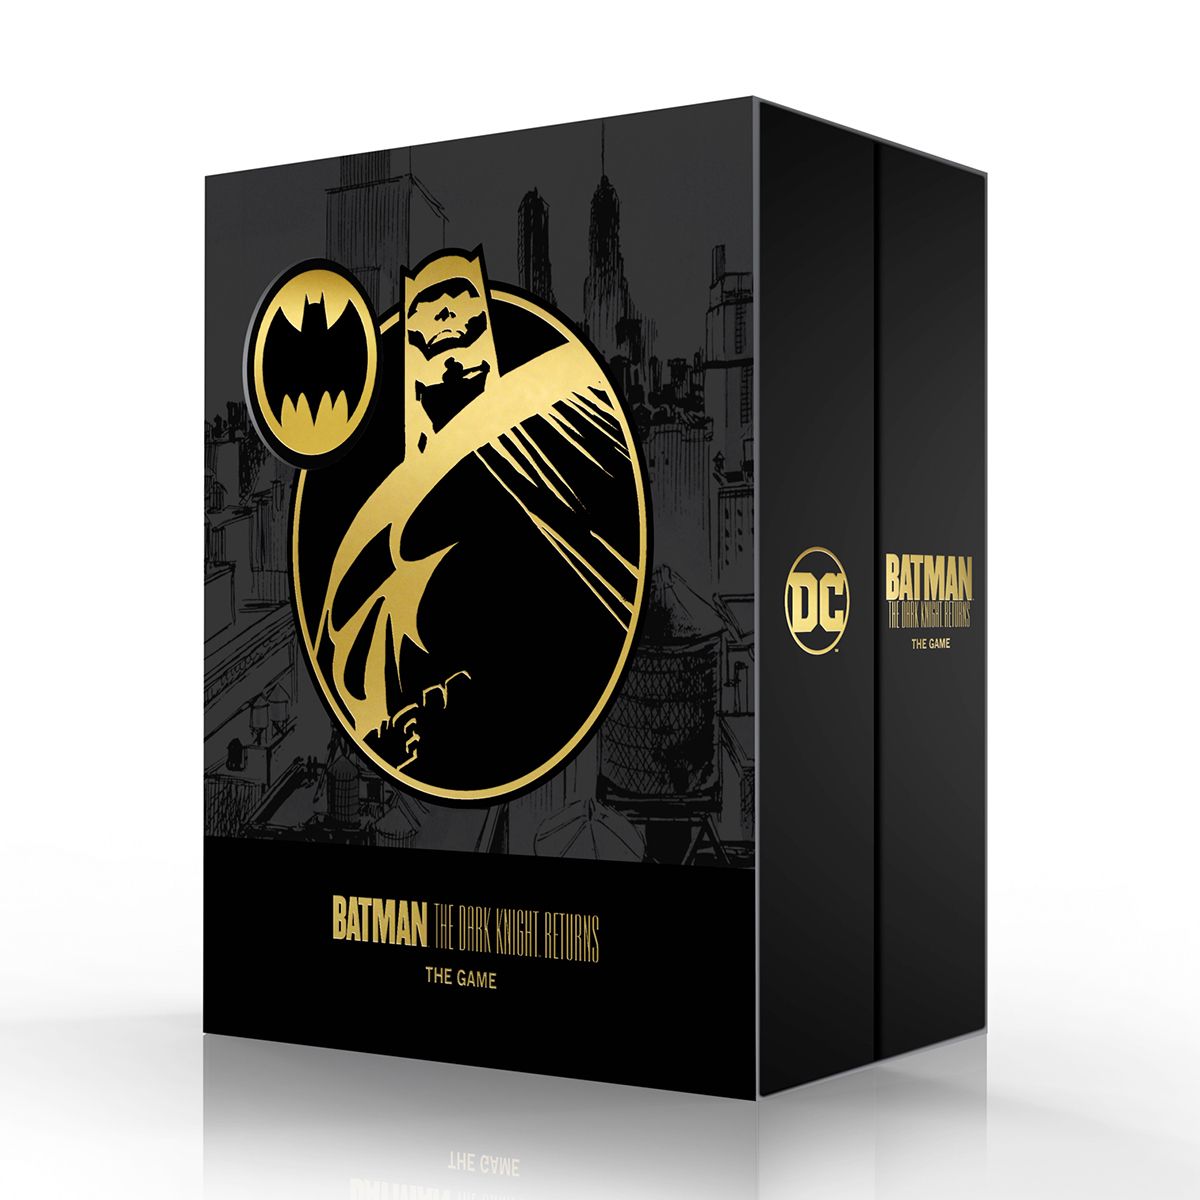 Batman: The Dark Knight Returns – The Game | Image | BoardGameGeek